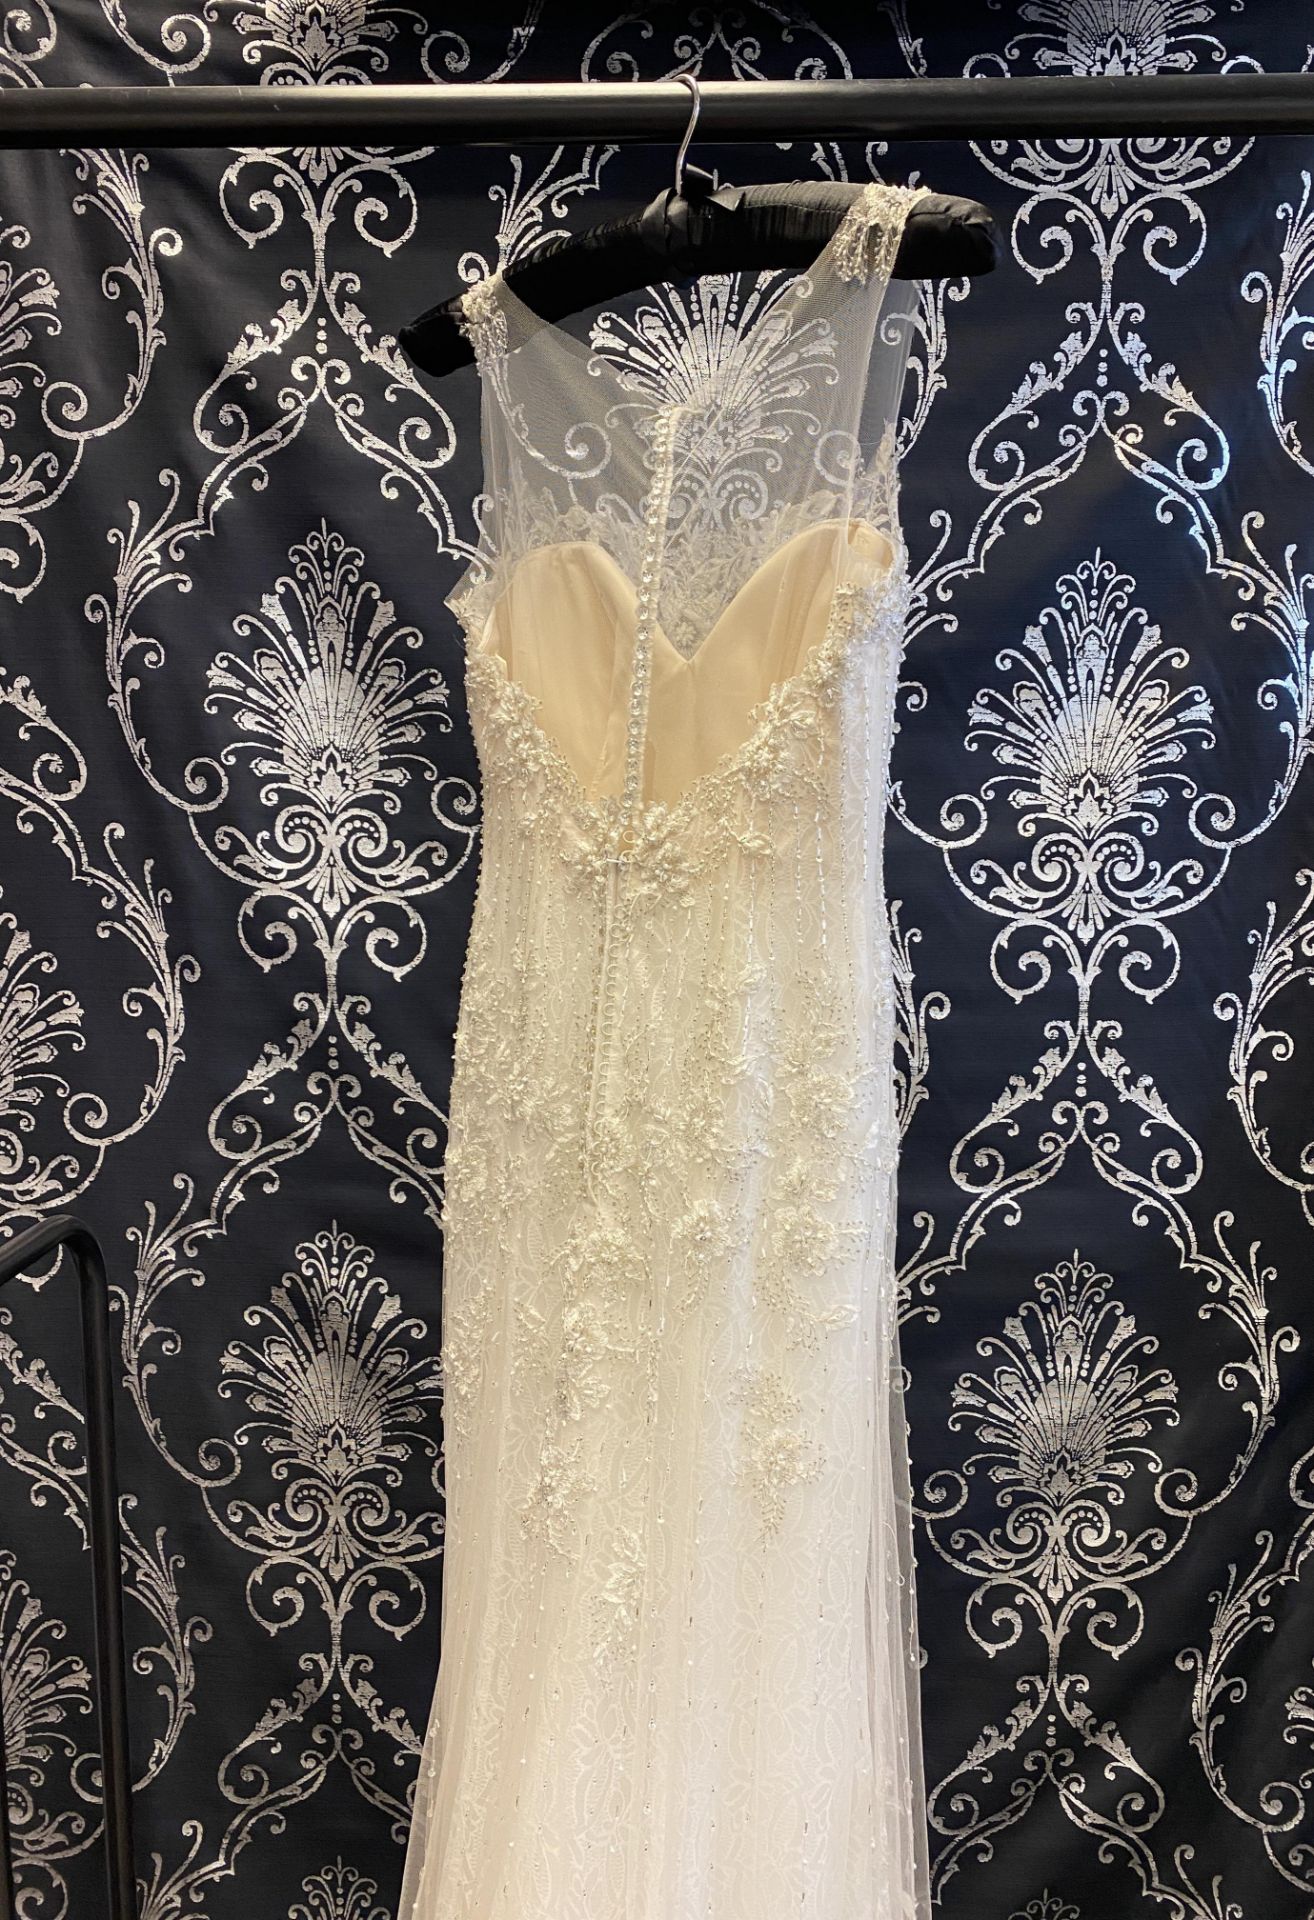 1 x LUSAN MANDONGUS 'Anastasia' Stunning Lace And Embroidered Designer Wedding Dress RRP £1,850 UK12 - Image 5 of 10